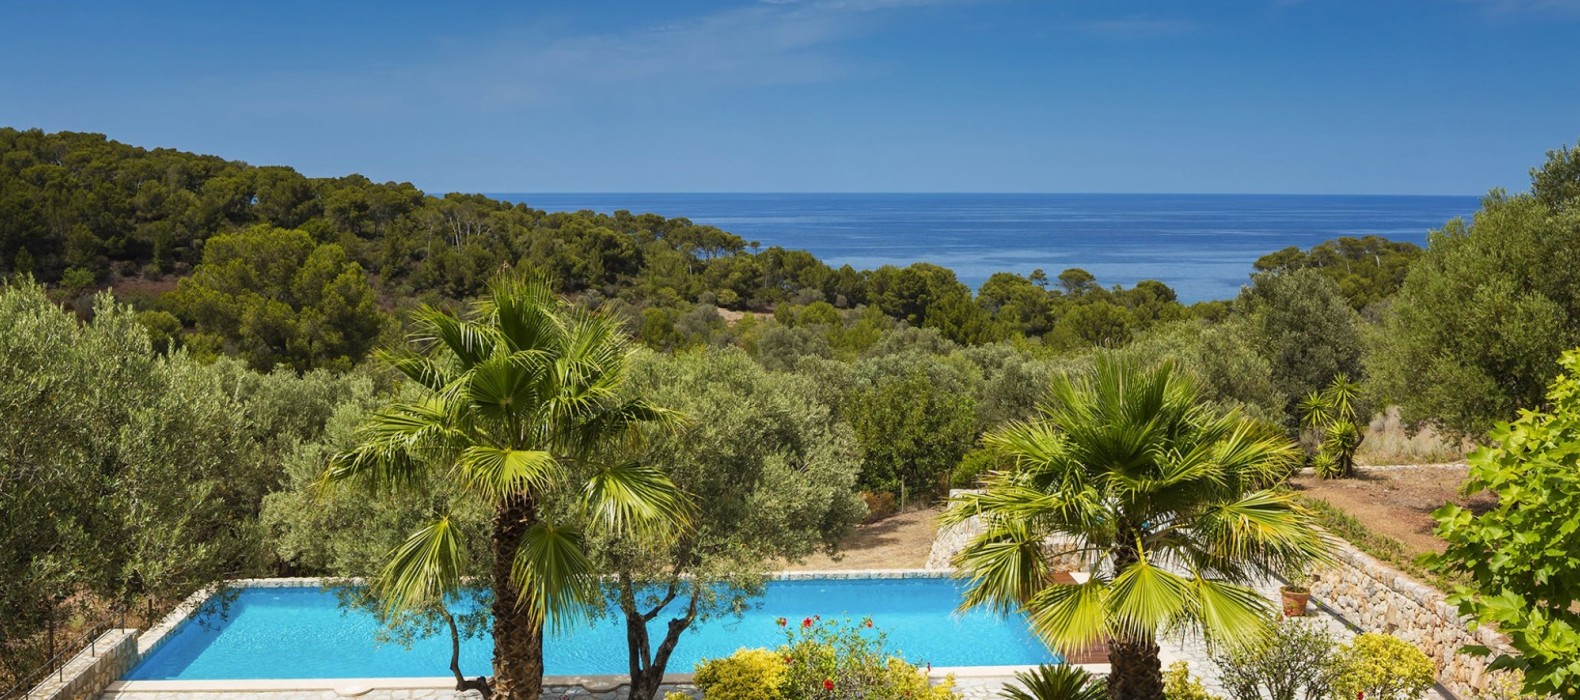 Garden with pool area of Villa Can Jungle in Mallorca